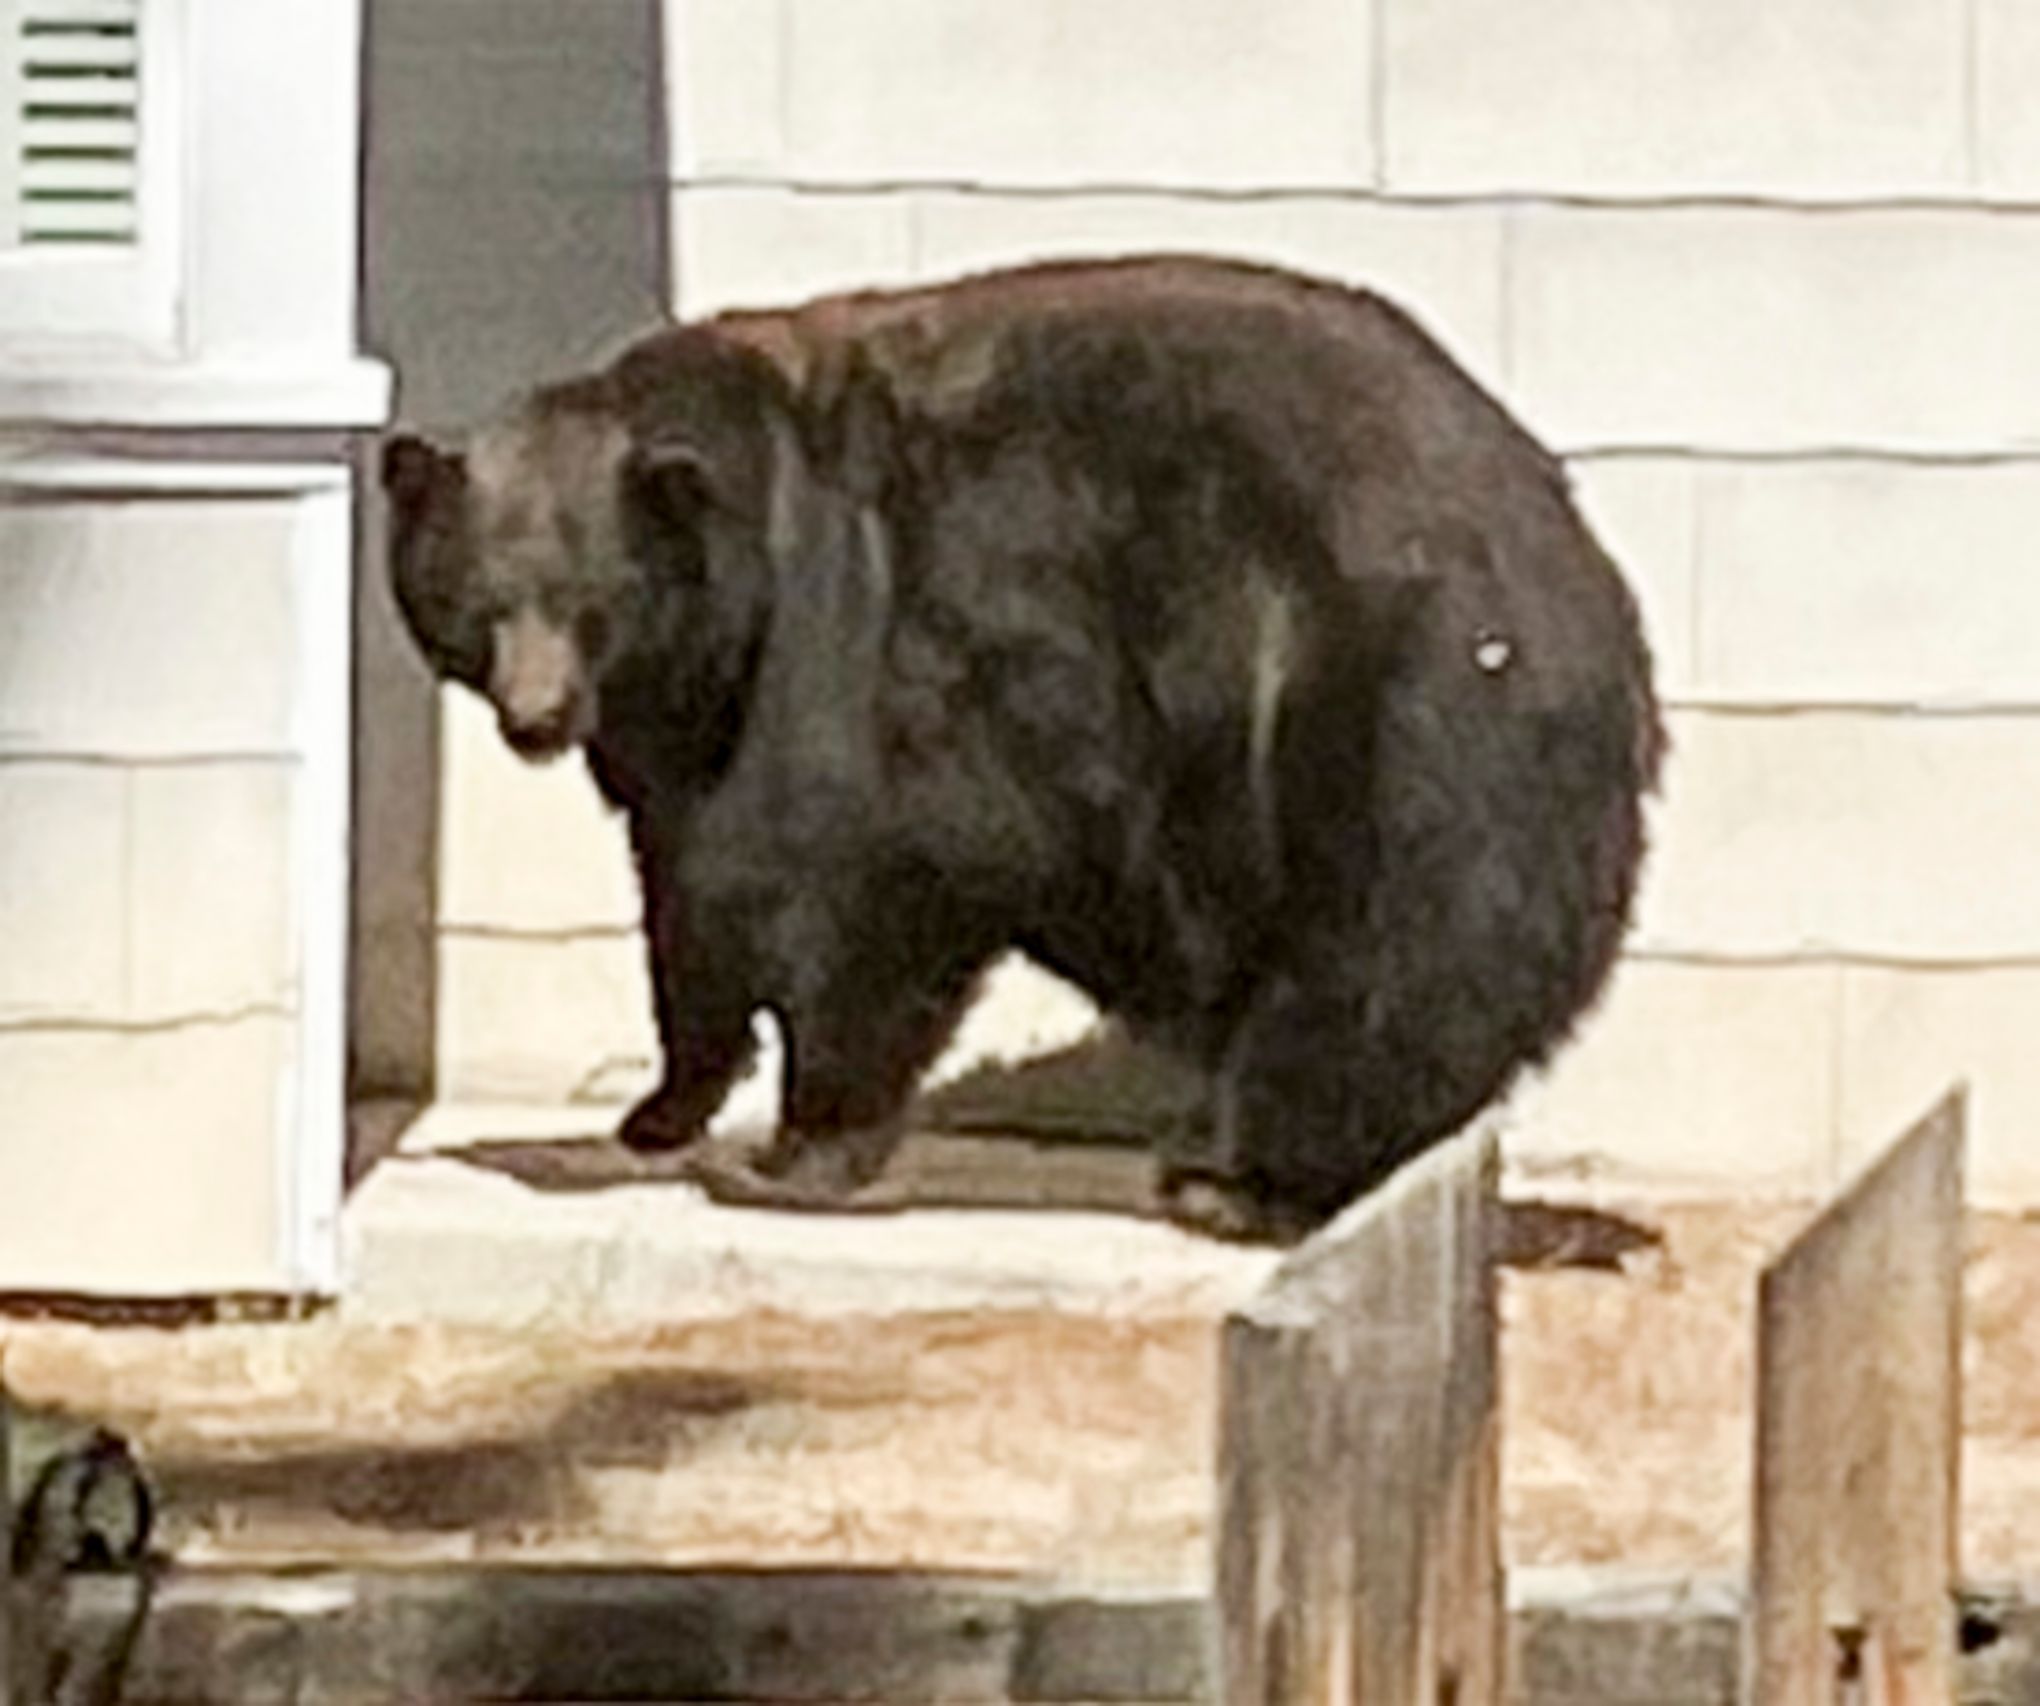 Hank the Tank, a 400-pound bear behind Lake Tahoe break-ins, is